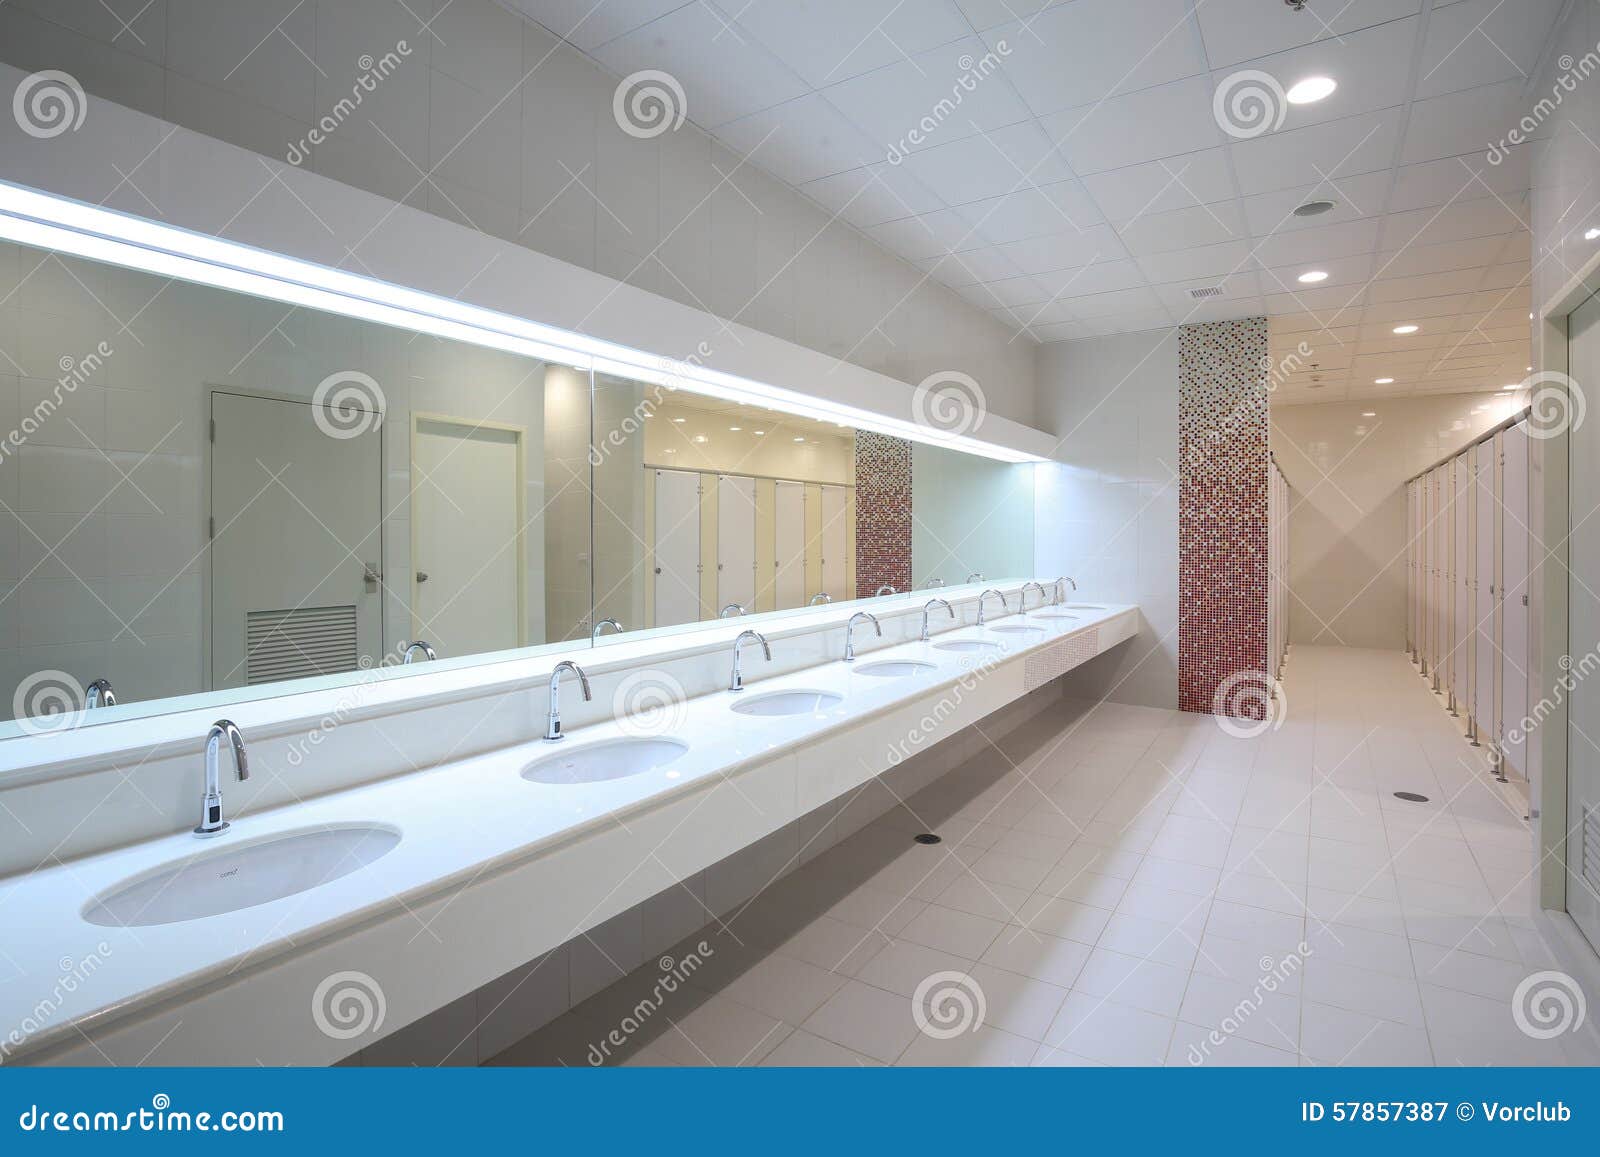 commercial bathroom